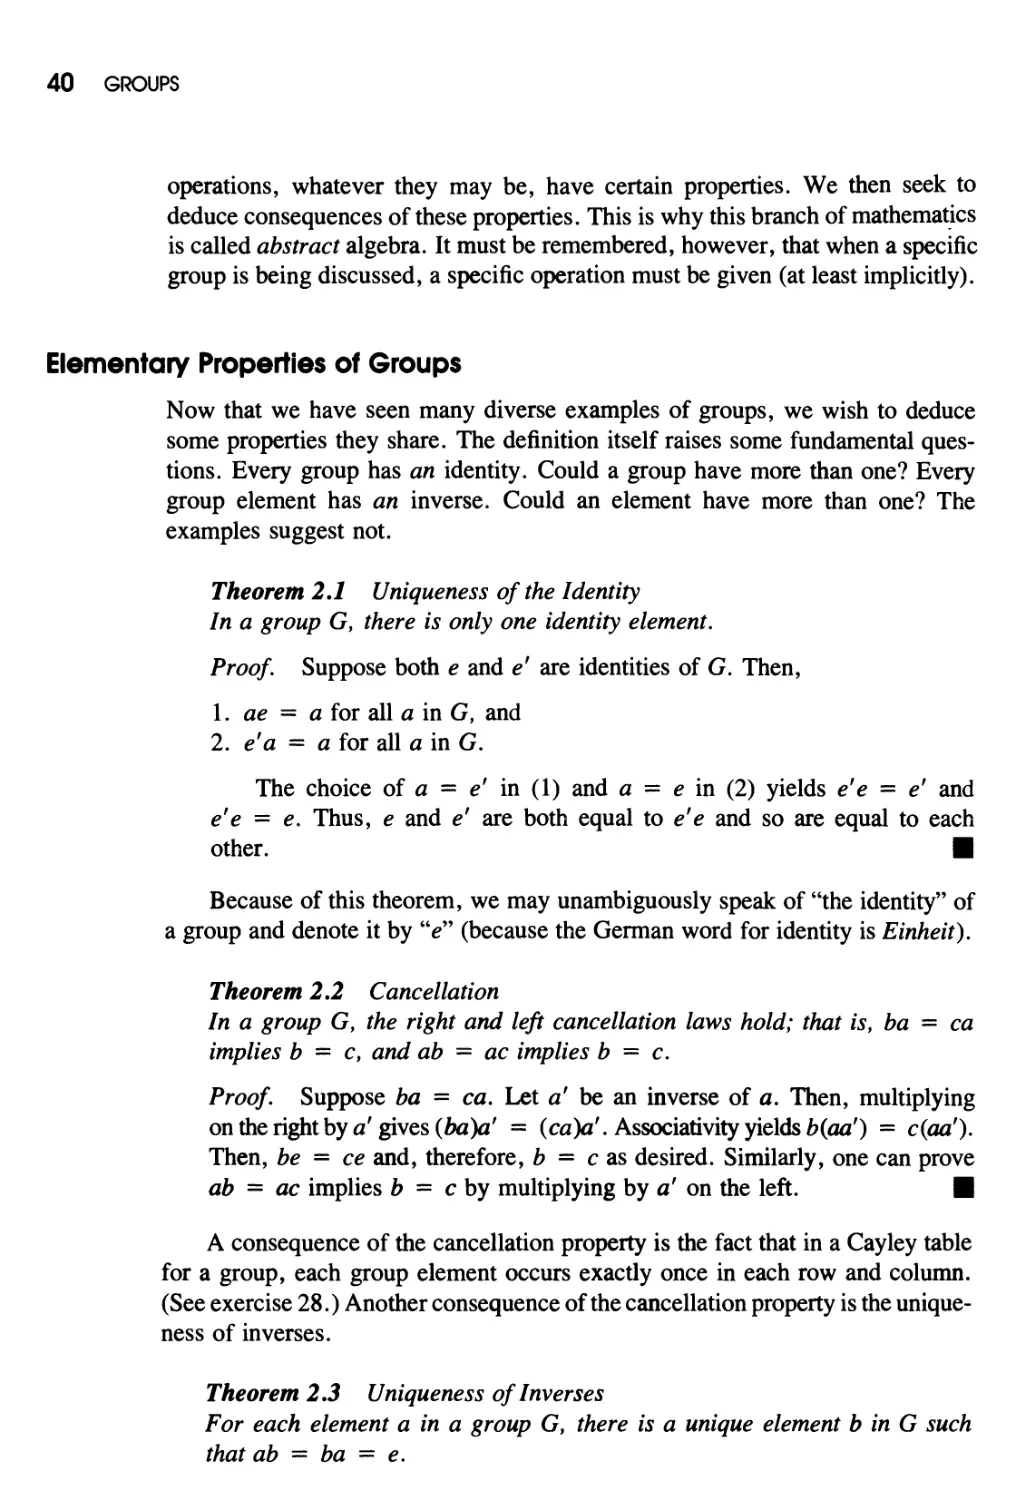 Elementary Properties of Groups